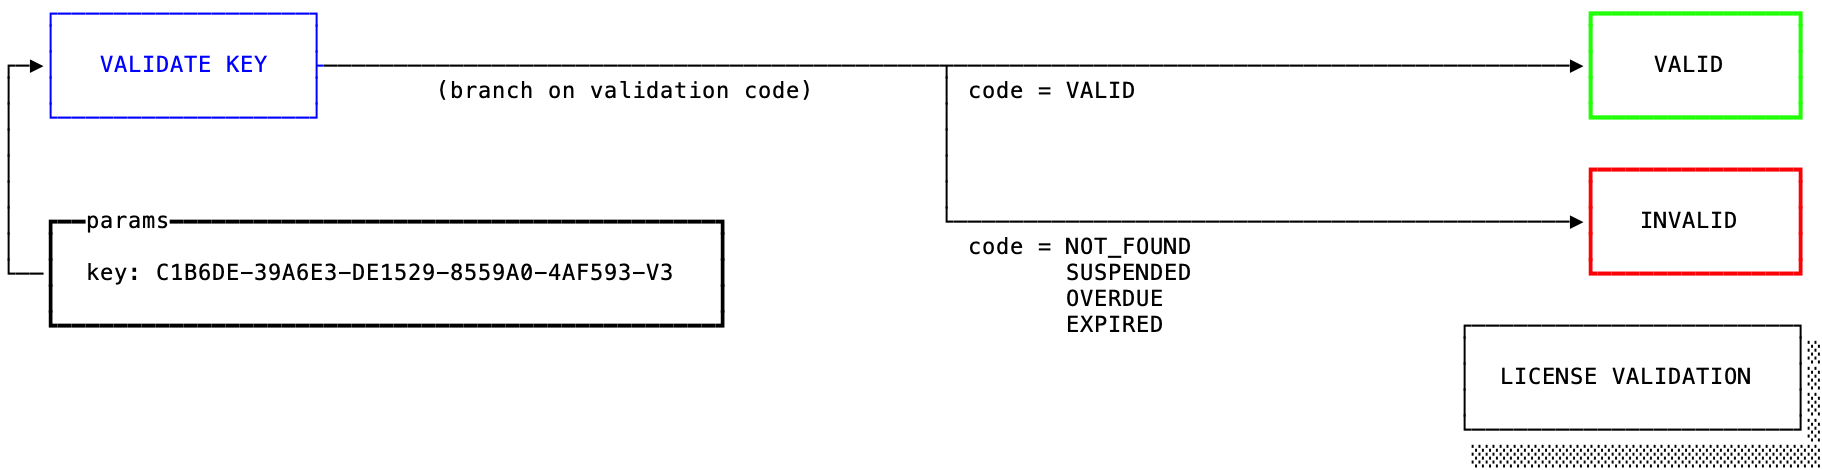 Diagram of validating a user-locked license key